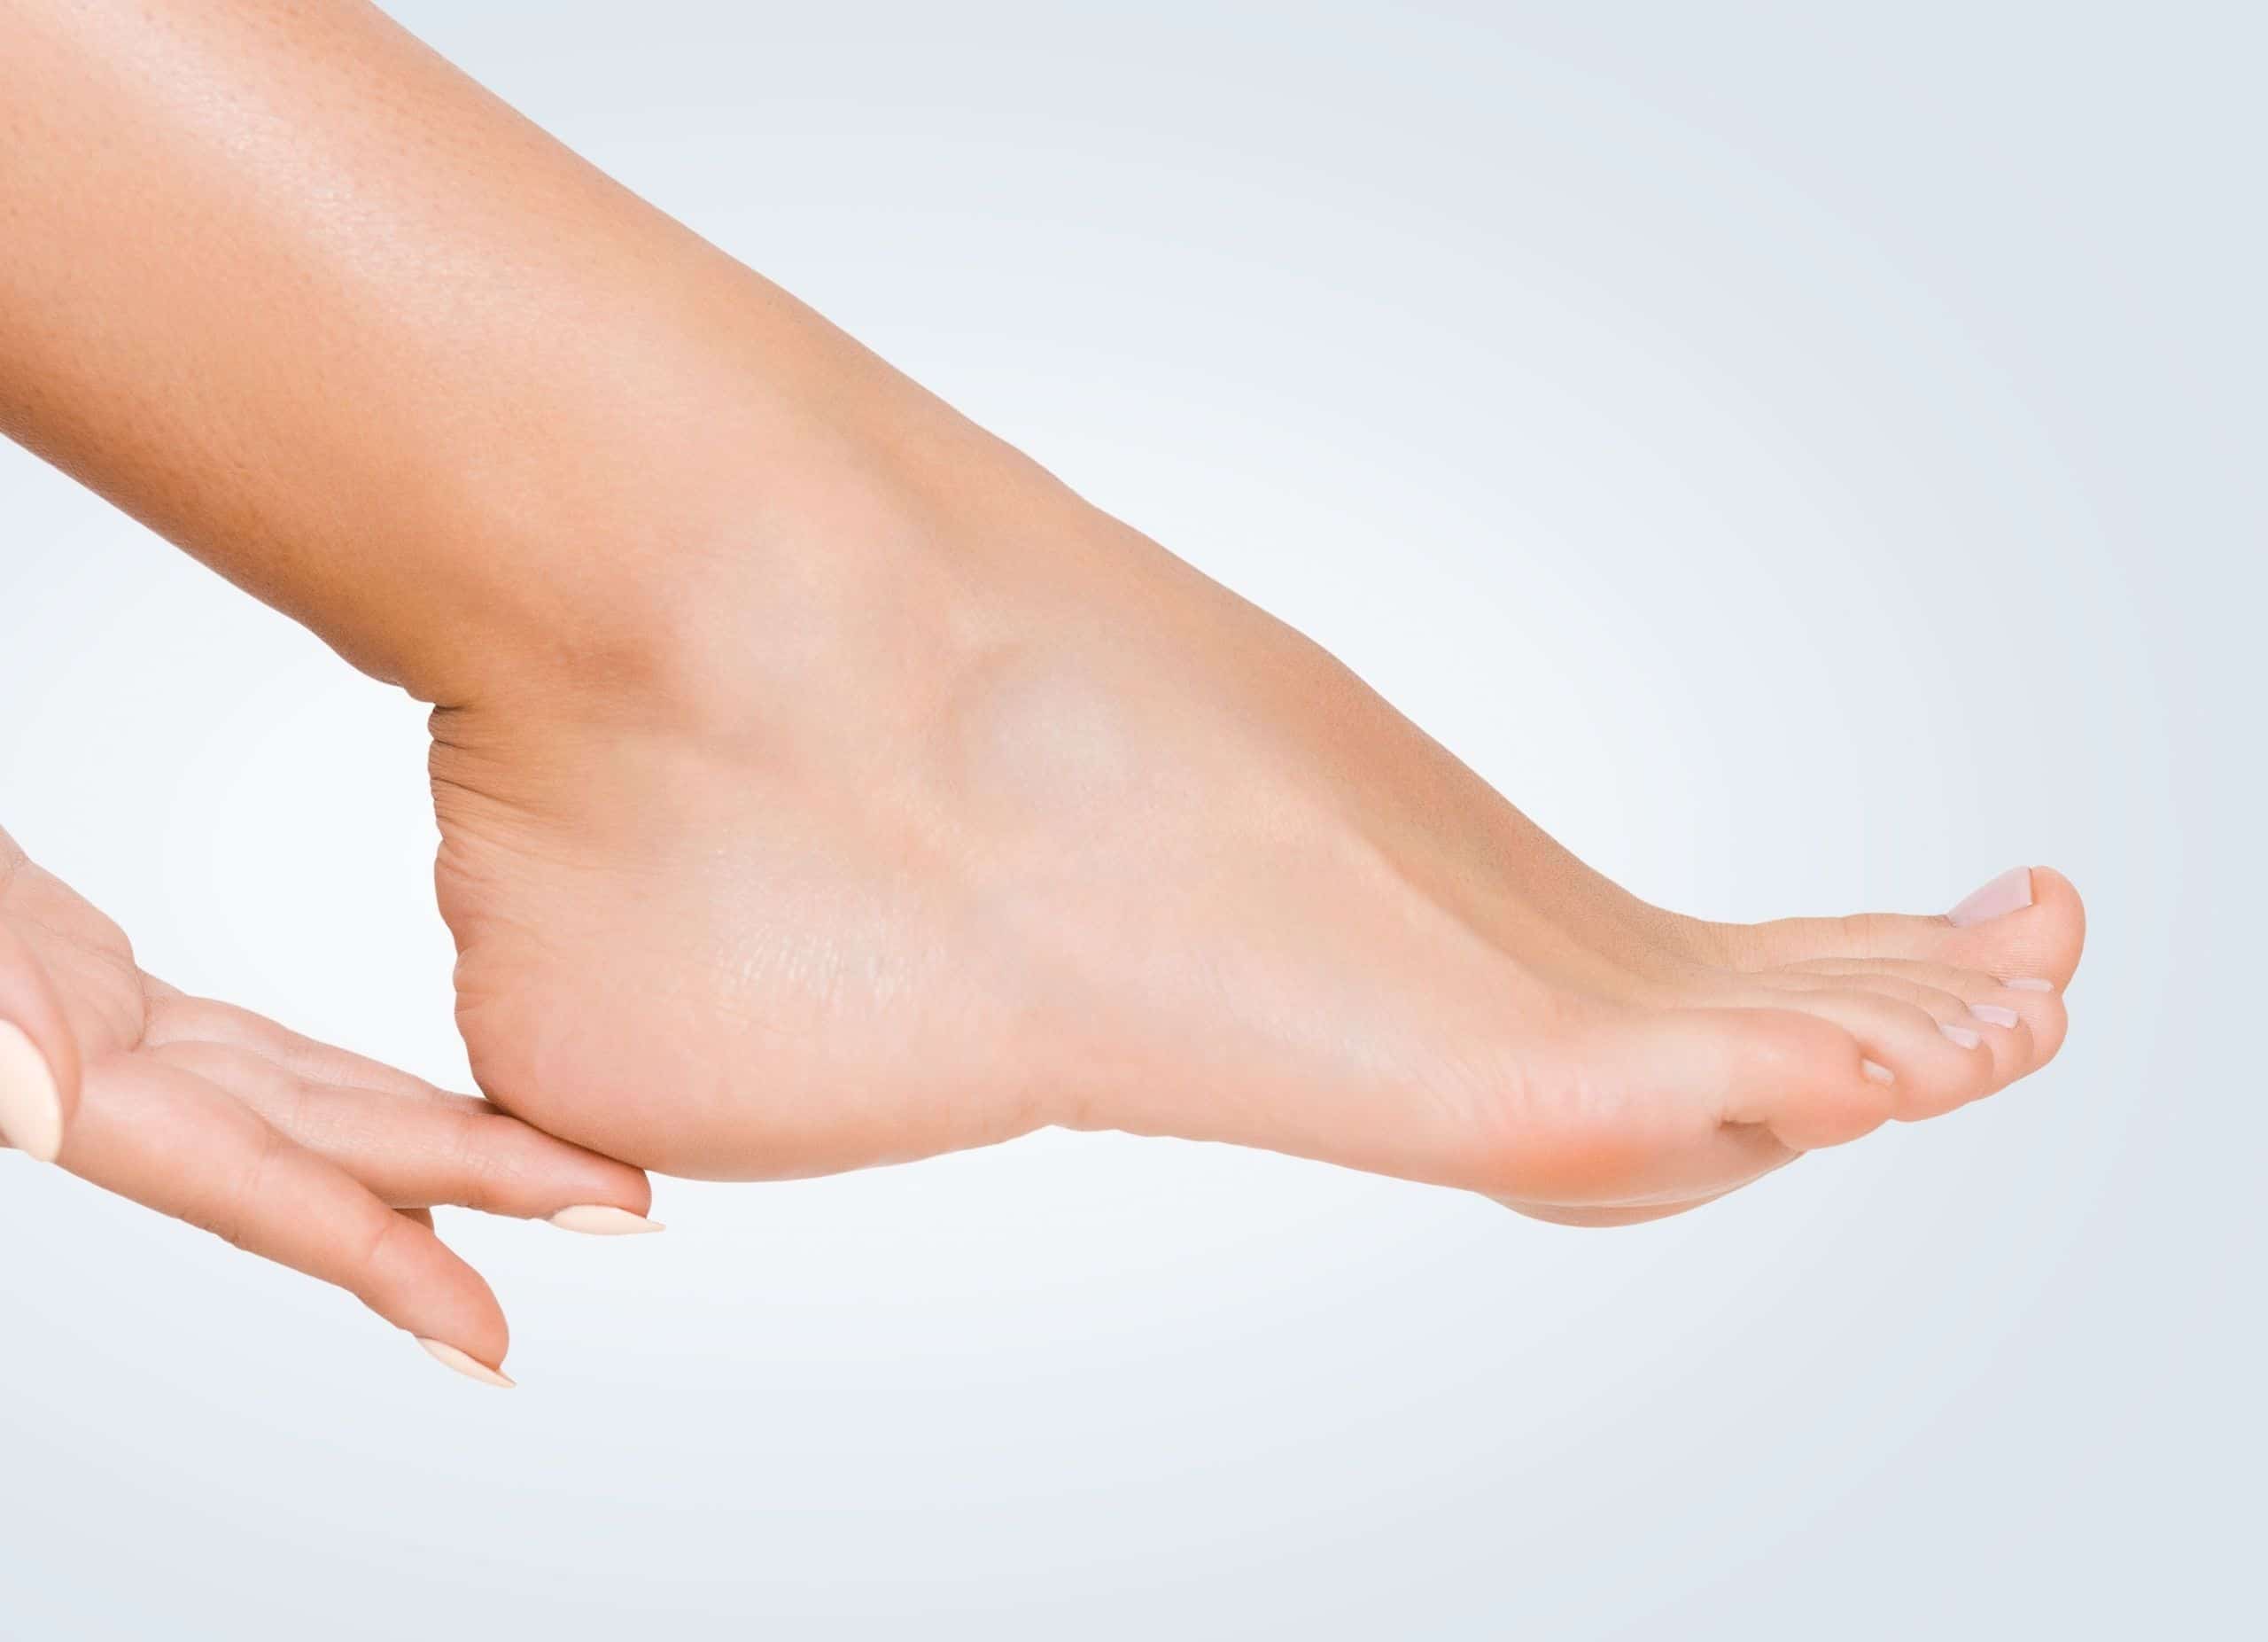 Callus removal pedicure for soft feet